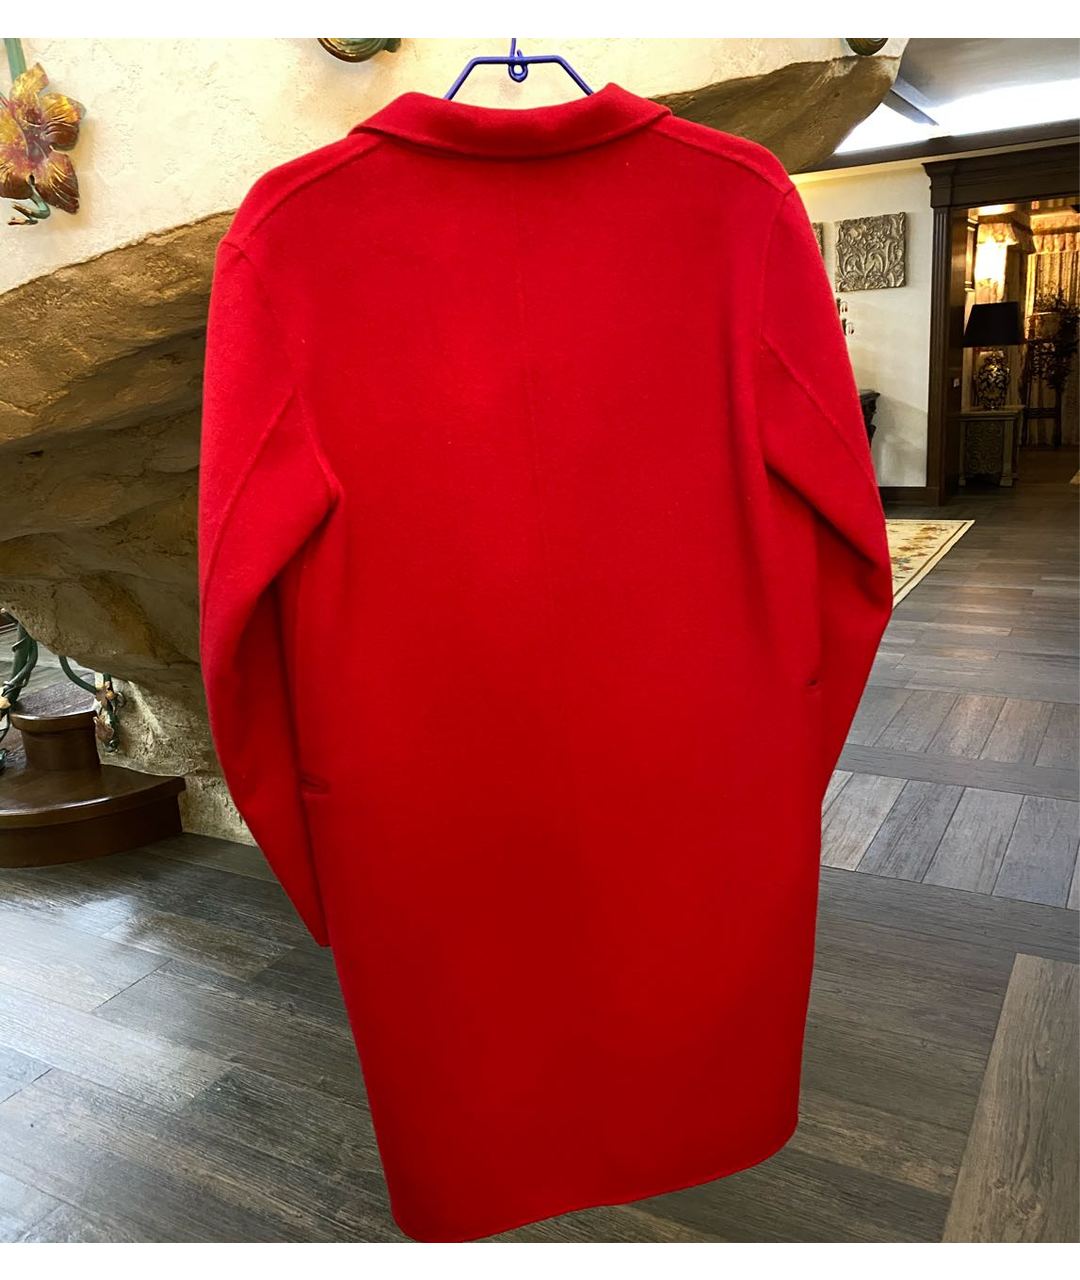 SANDRO Красное шерстяное пальто, фото 2